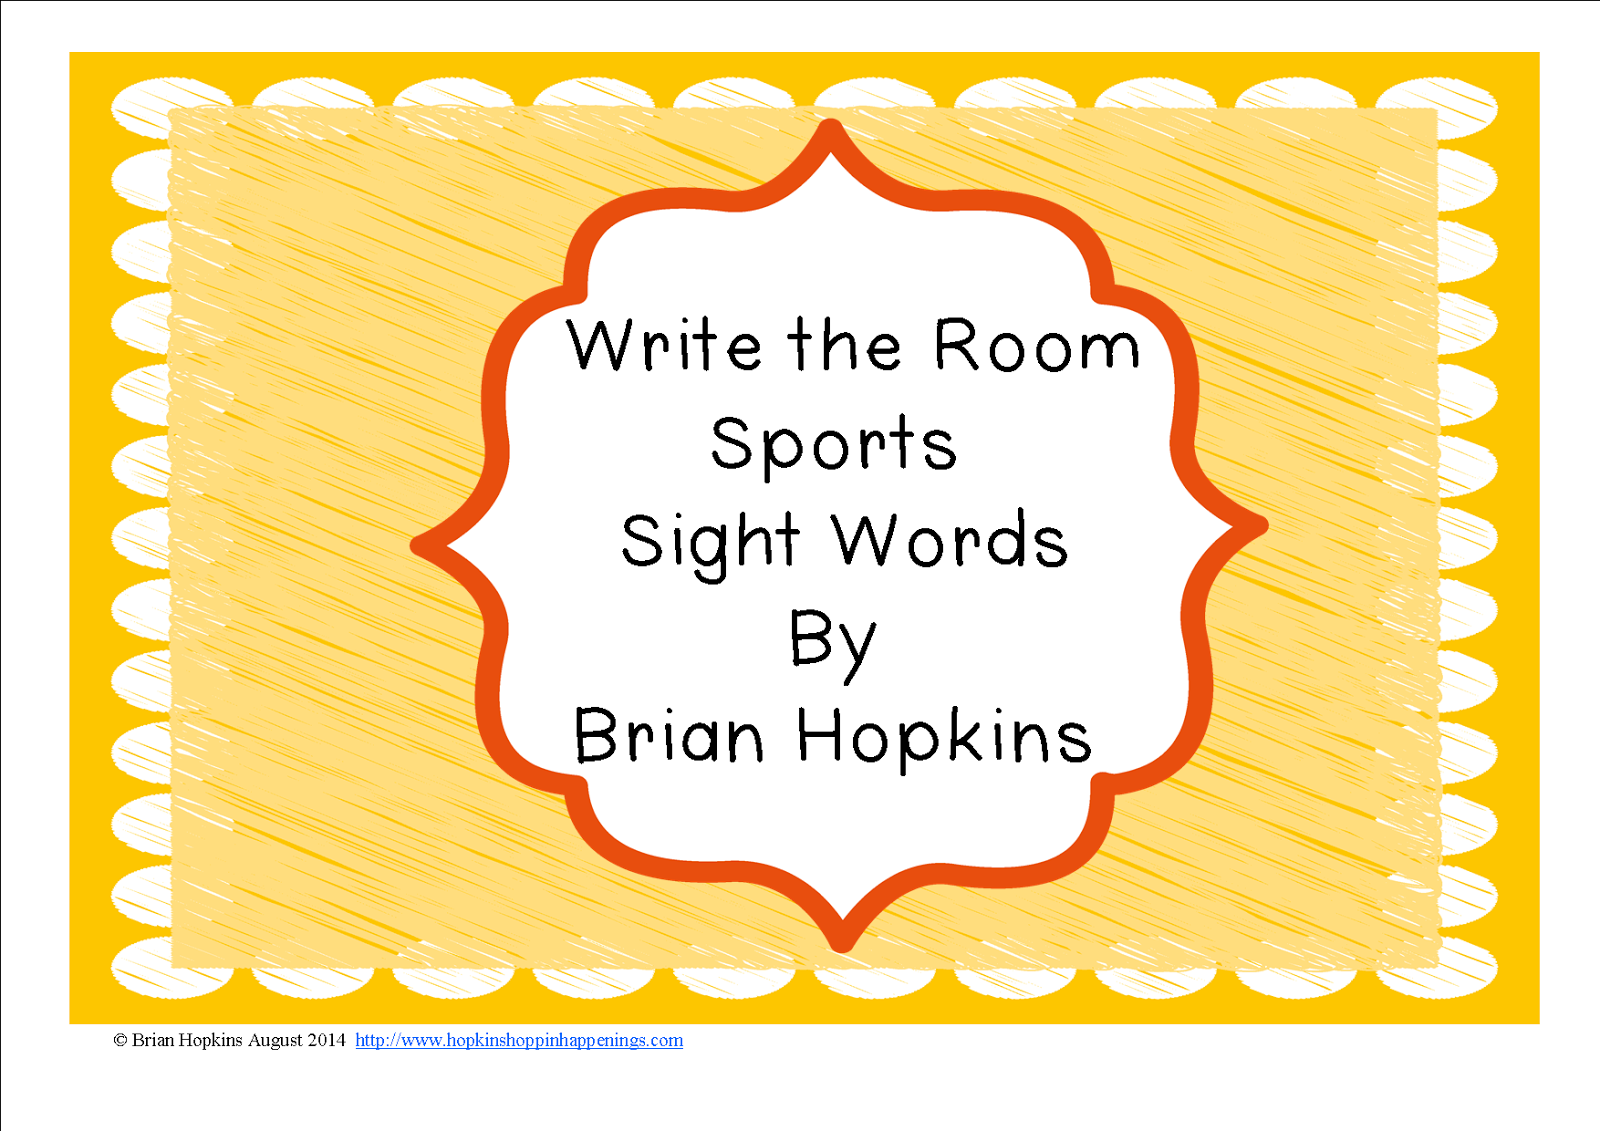 http://www.teacherspayteachers.com/Product/Write-The-Room-Sports-Sight-Words-FREEBIE-1394096